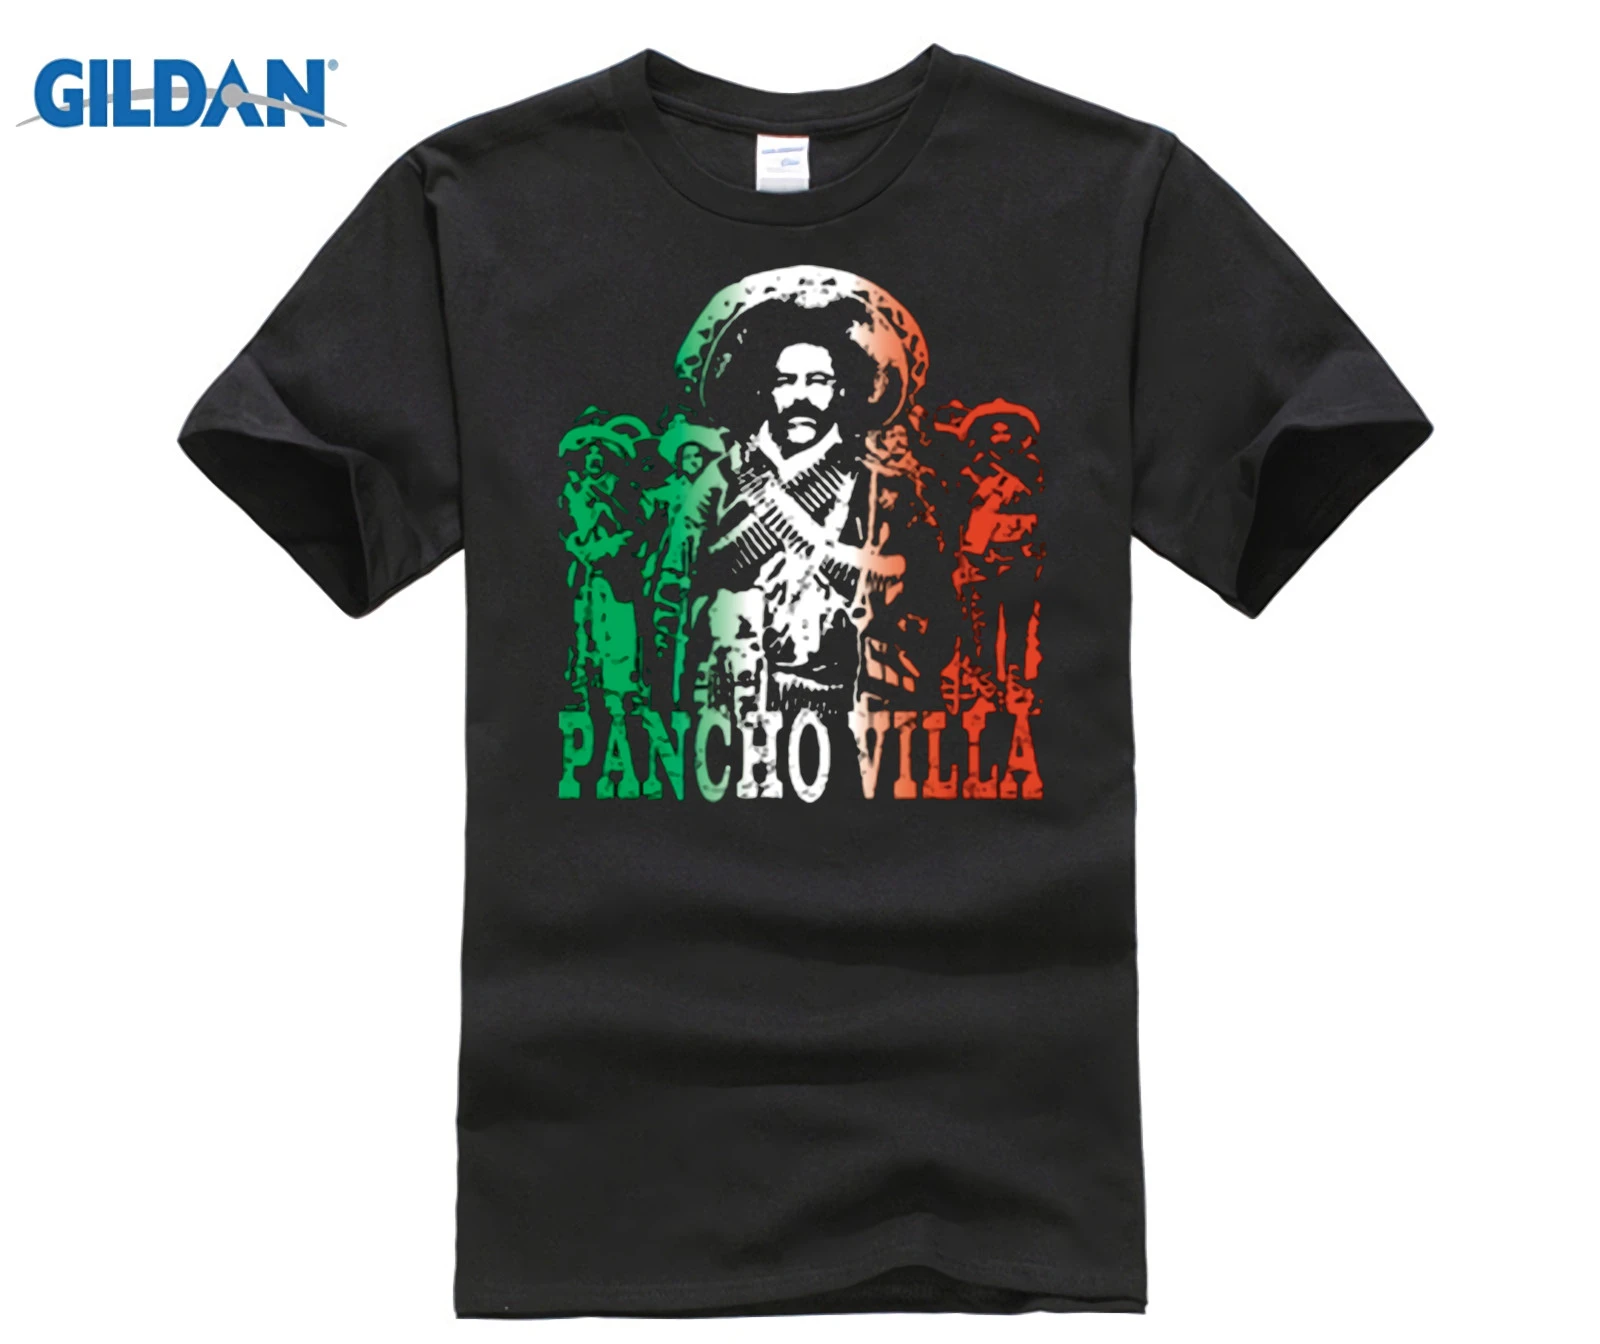 GILDAN Pancho Villa Mexico Revolution Hero Mexican Pride T Shirt Tee New  Summer Style Cool Casual Sleeves Cotton T Shirt Fashion|T-Shirts| -  AliExpress